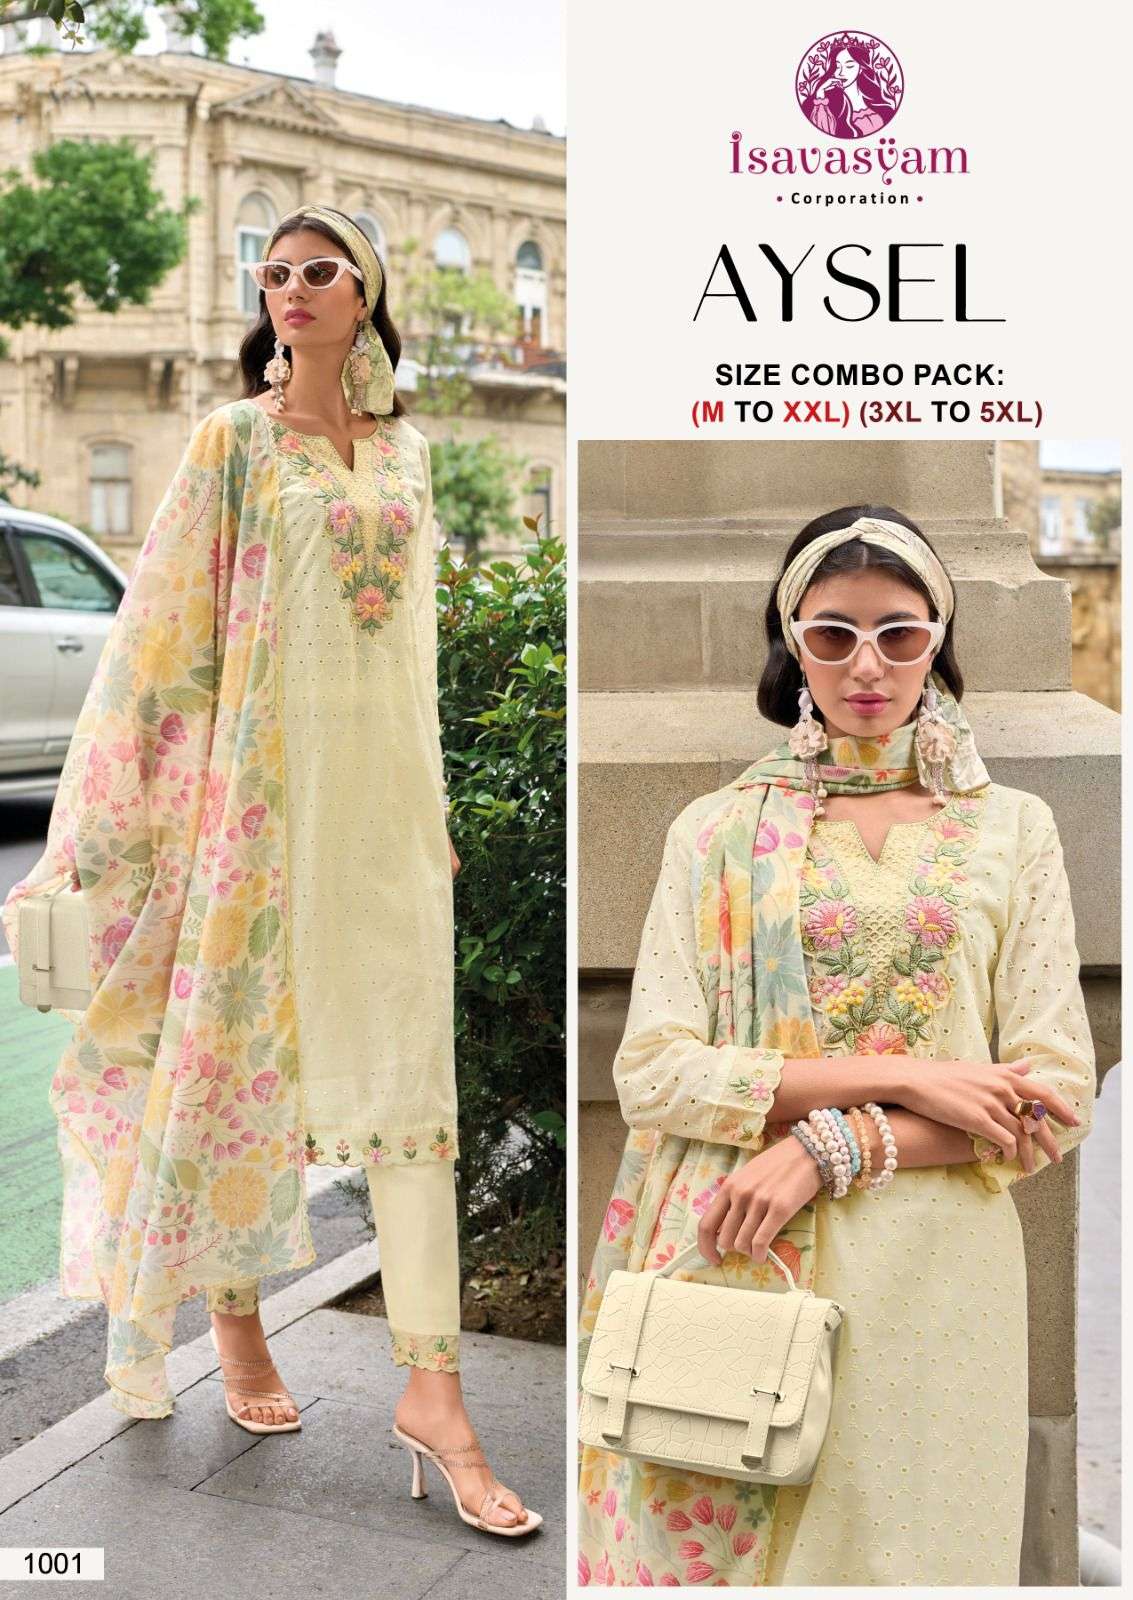 isavasyam corporatio aysel 1001 design cotton readymade dress catalogue online supplier surat gujarat 